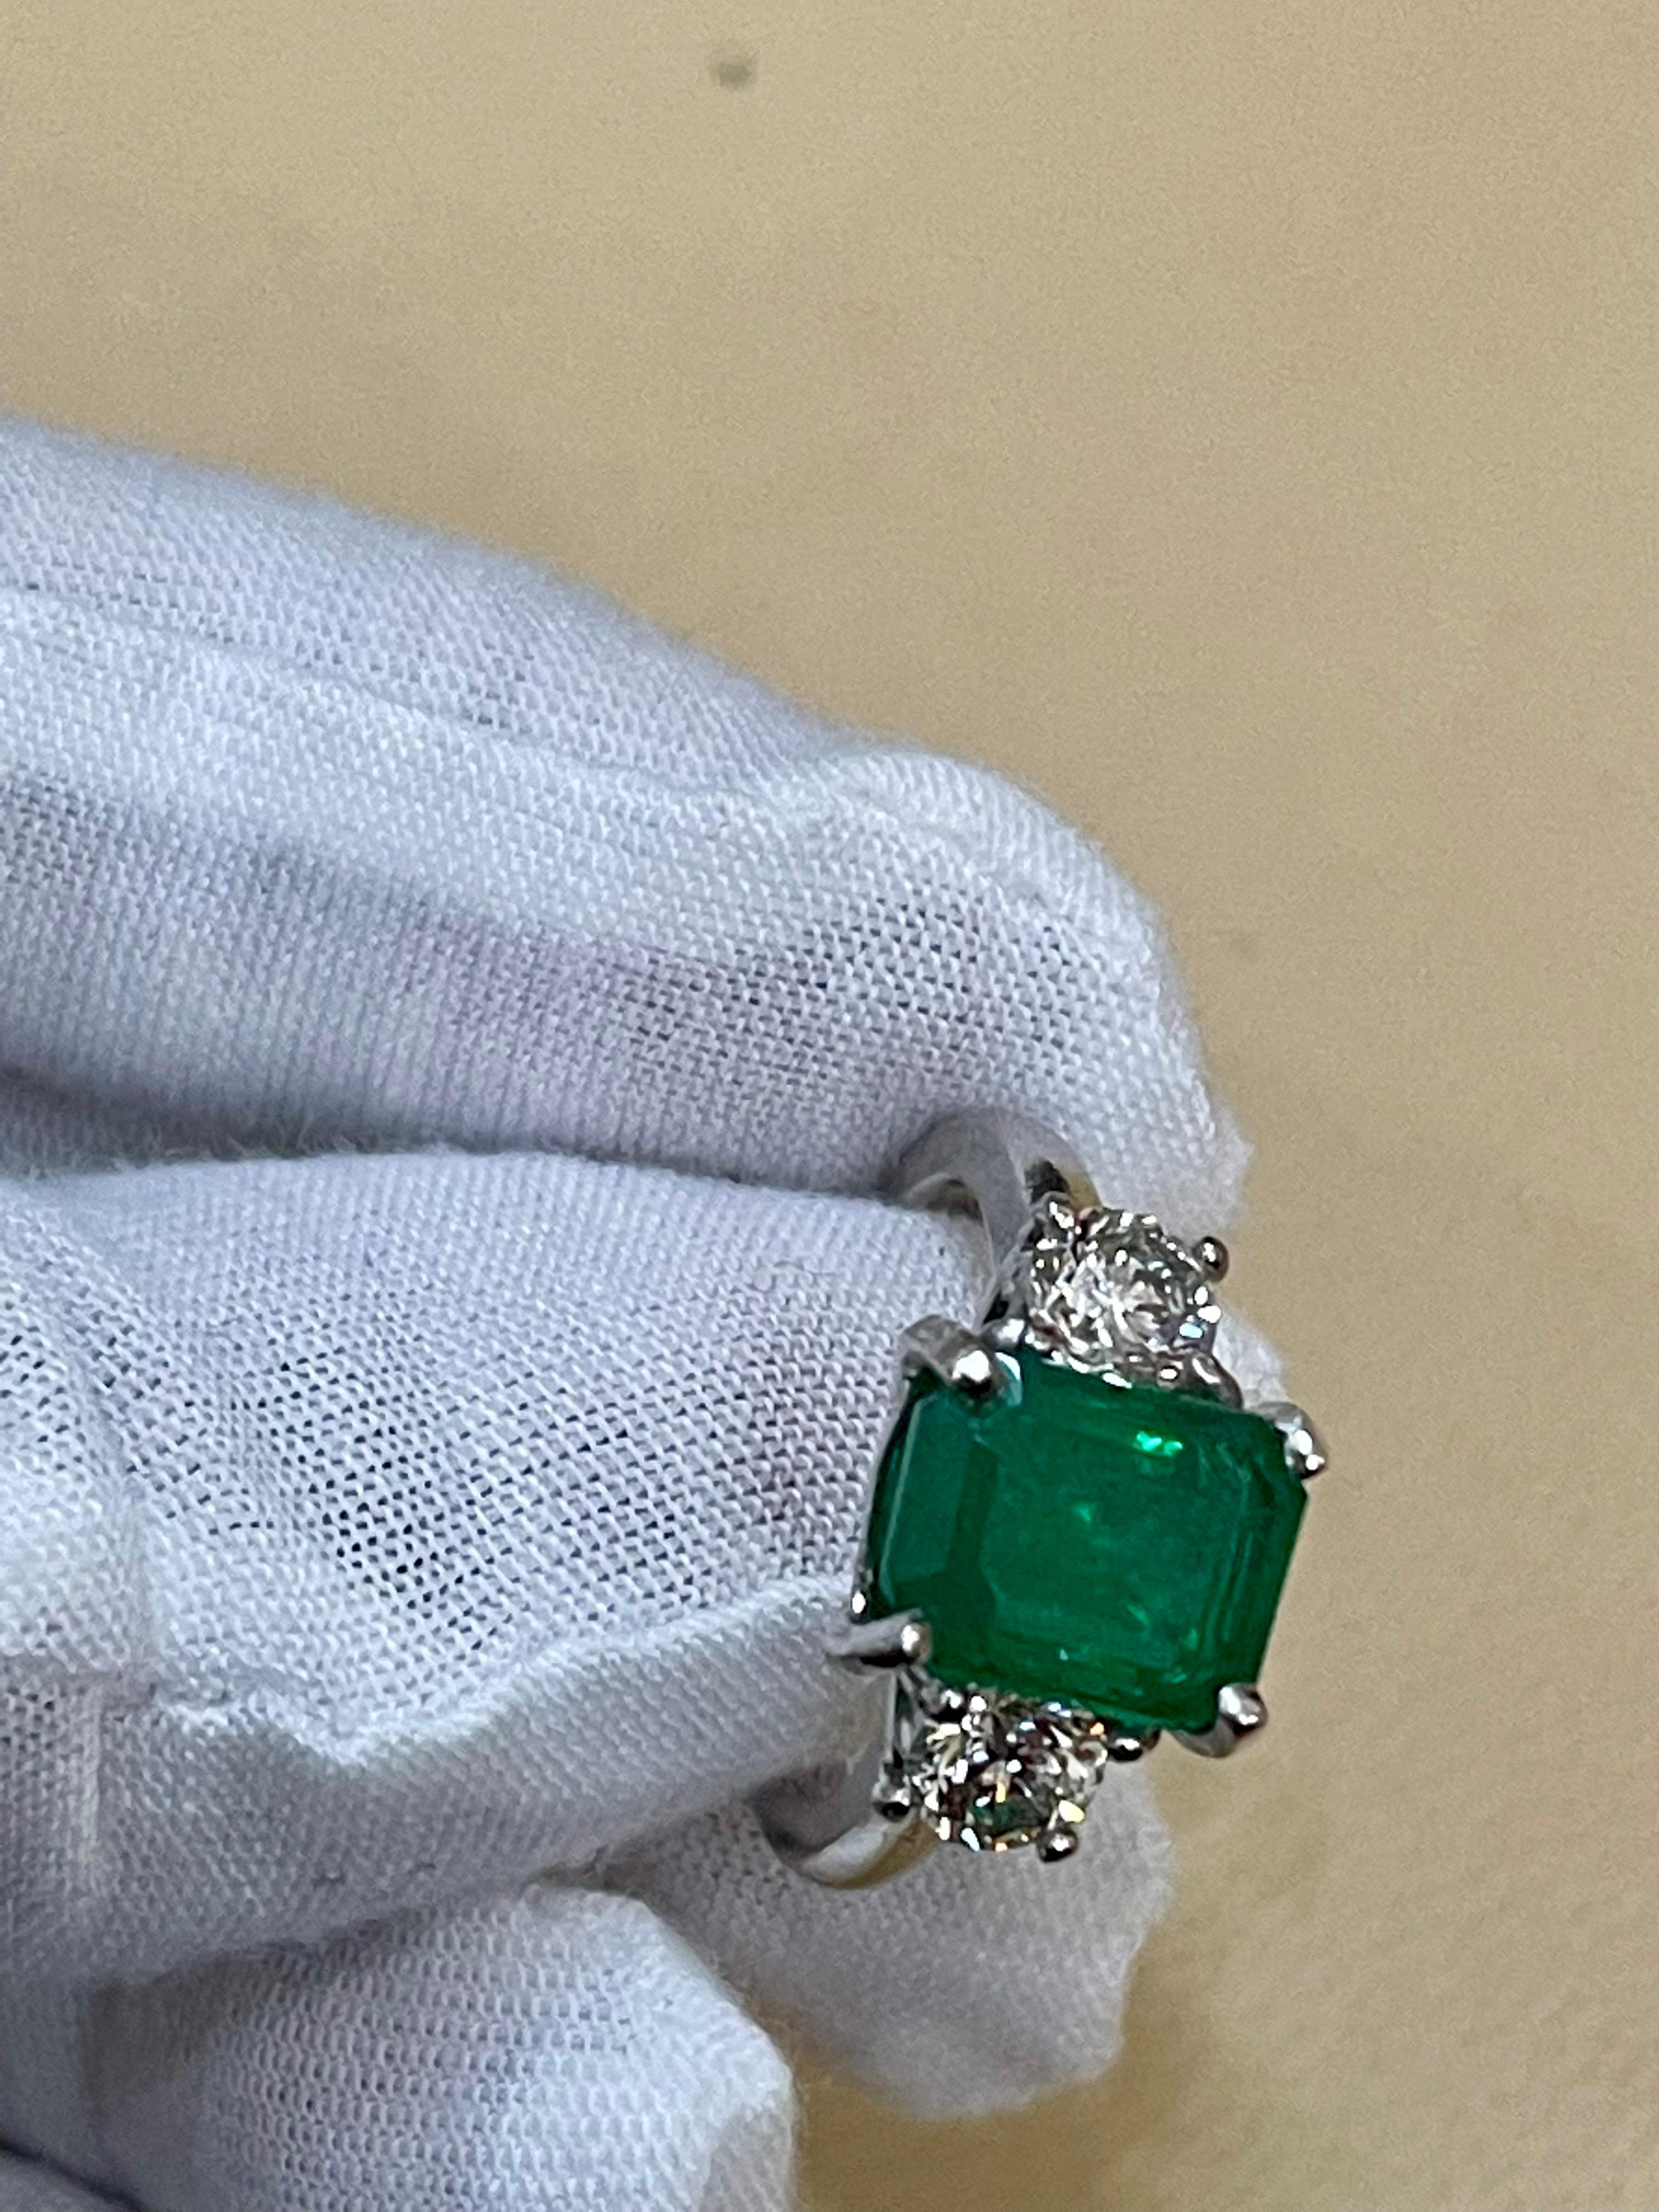 3.6 Carat Emerald Cut Emerald and 1.06 Carat Diamond Ring Platinum 14